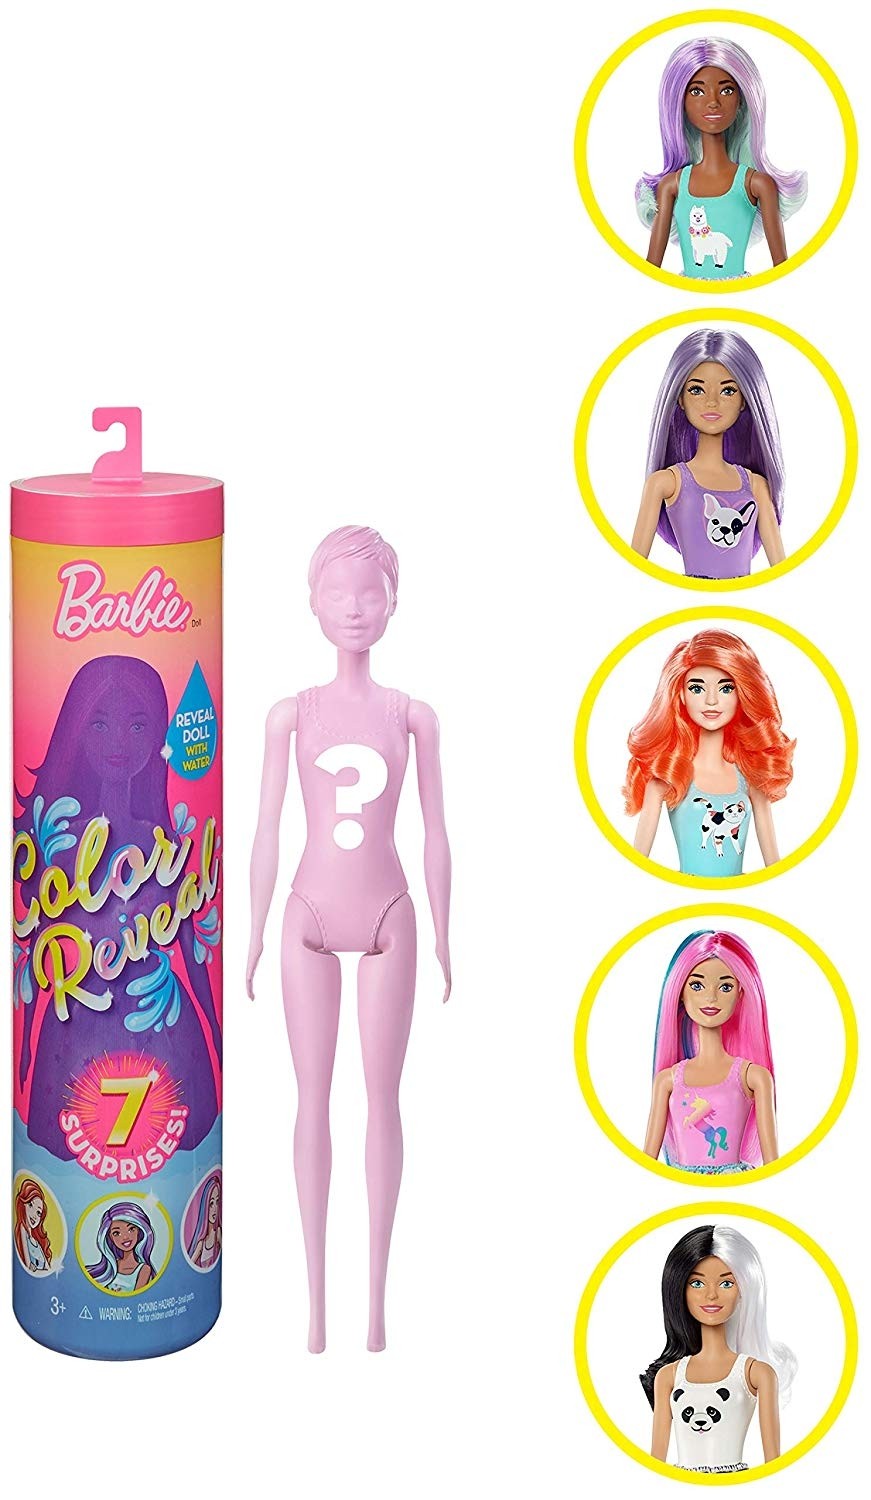 Barbie Reveal Color con 7 sorprese